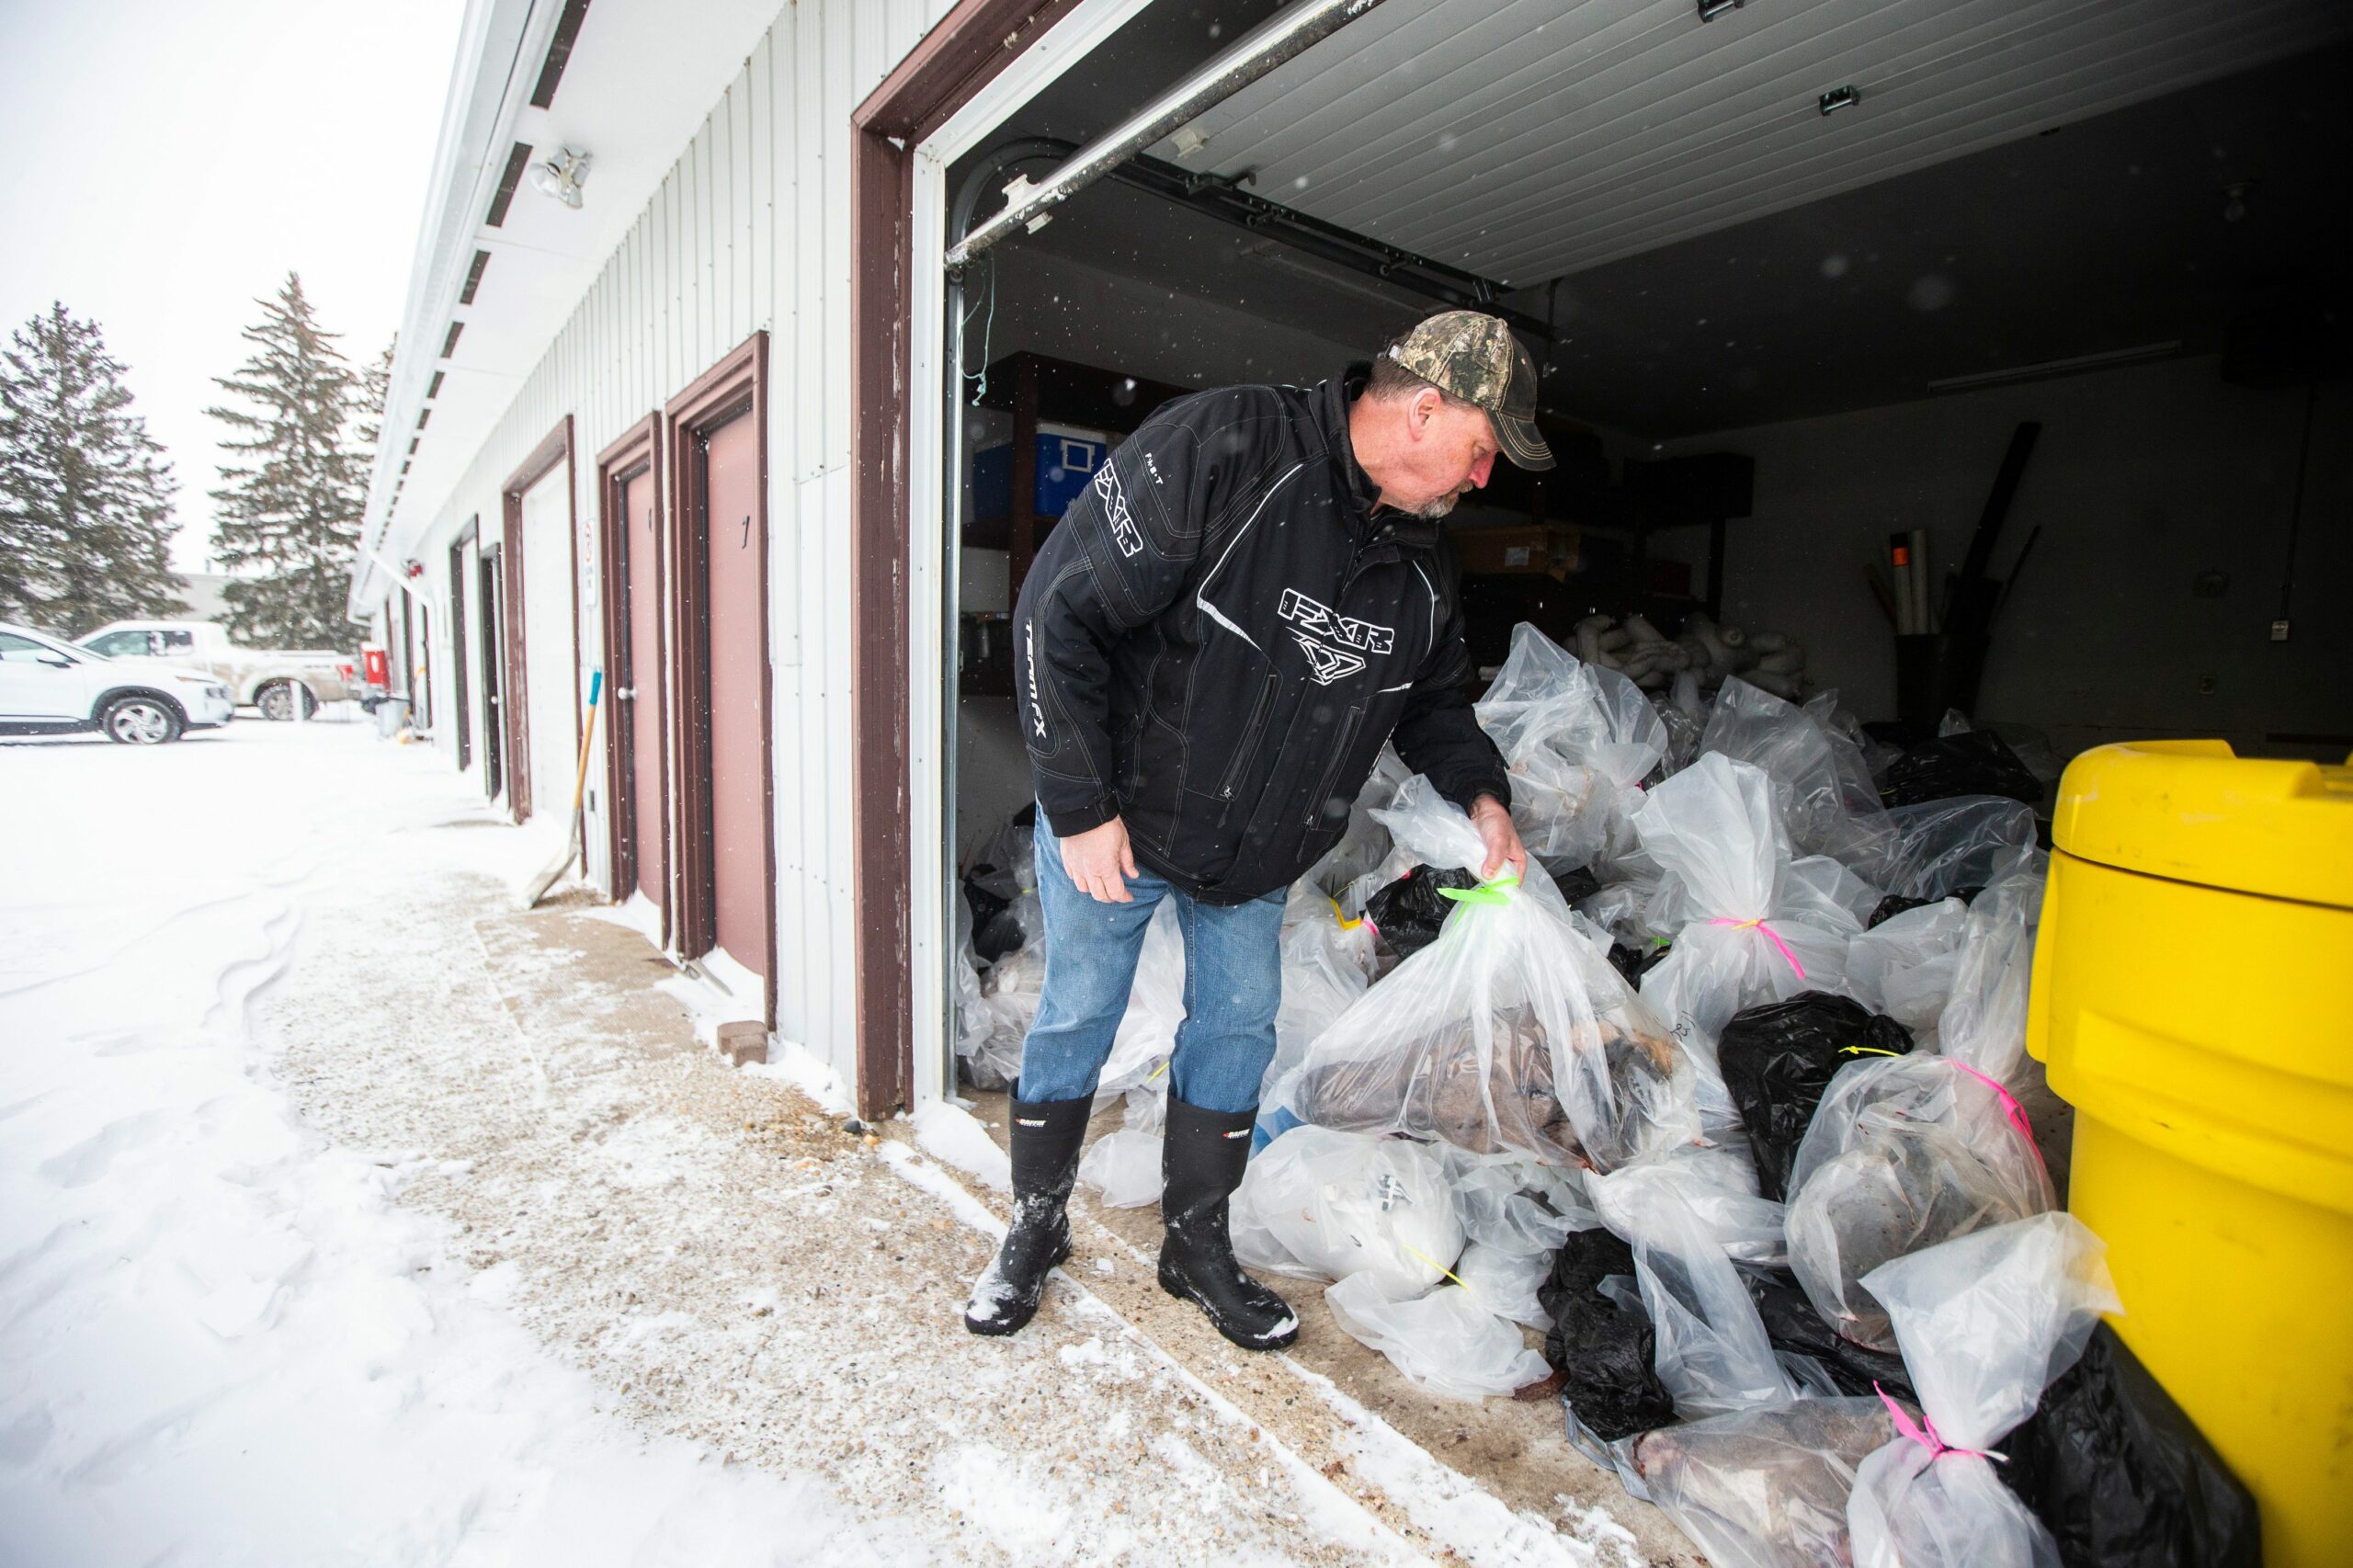 Wildlife health biologist Richard Davis shows a pile of frozen deer heads awaiting chronic wasting disease testing at Manitoba's wildlife health lab